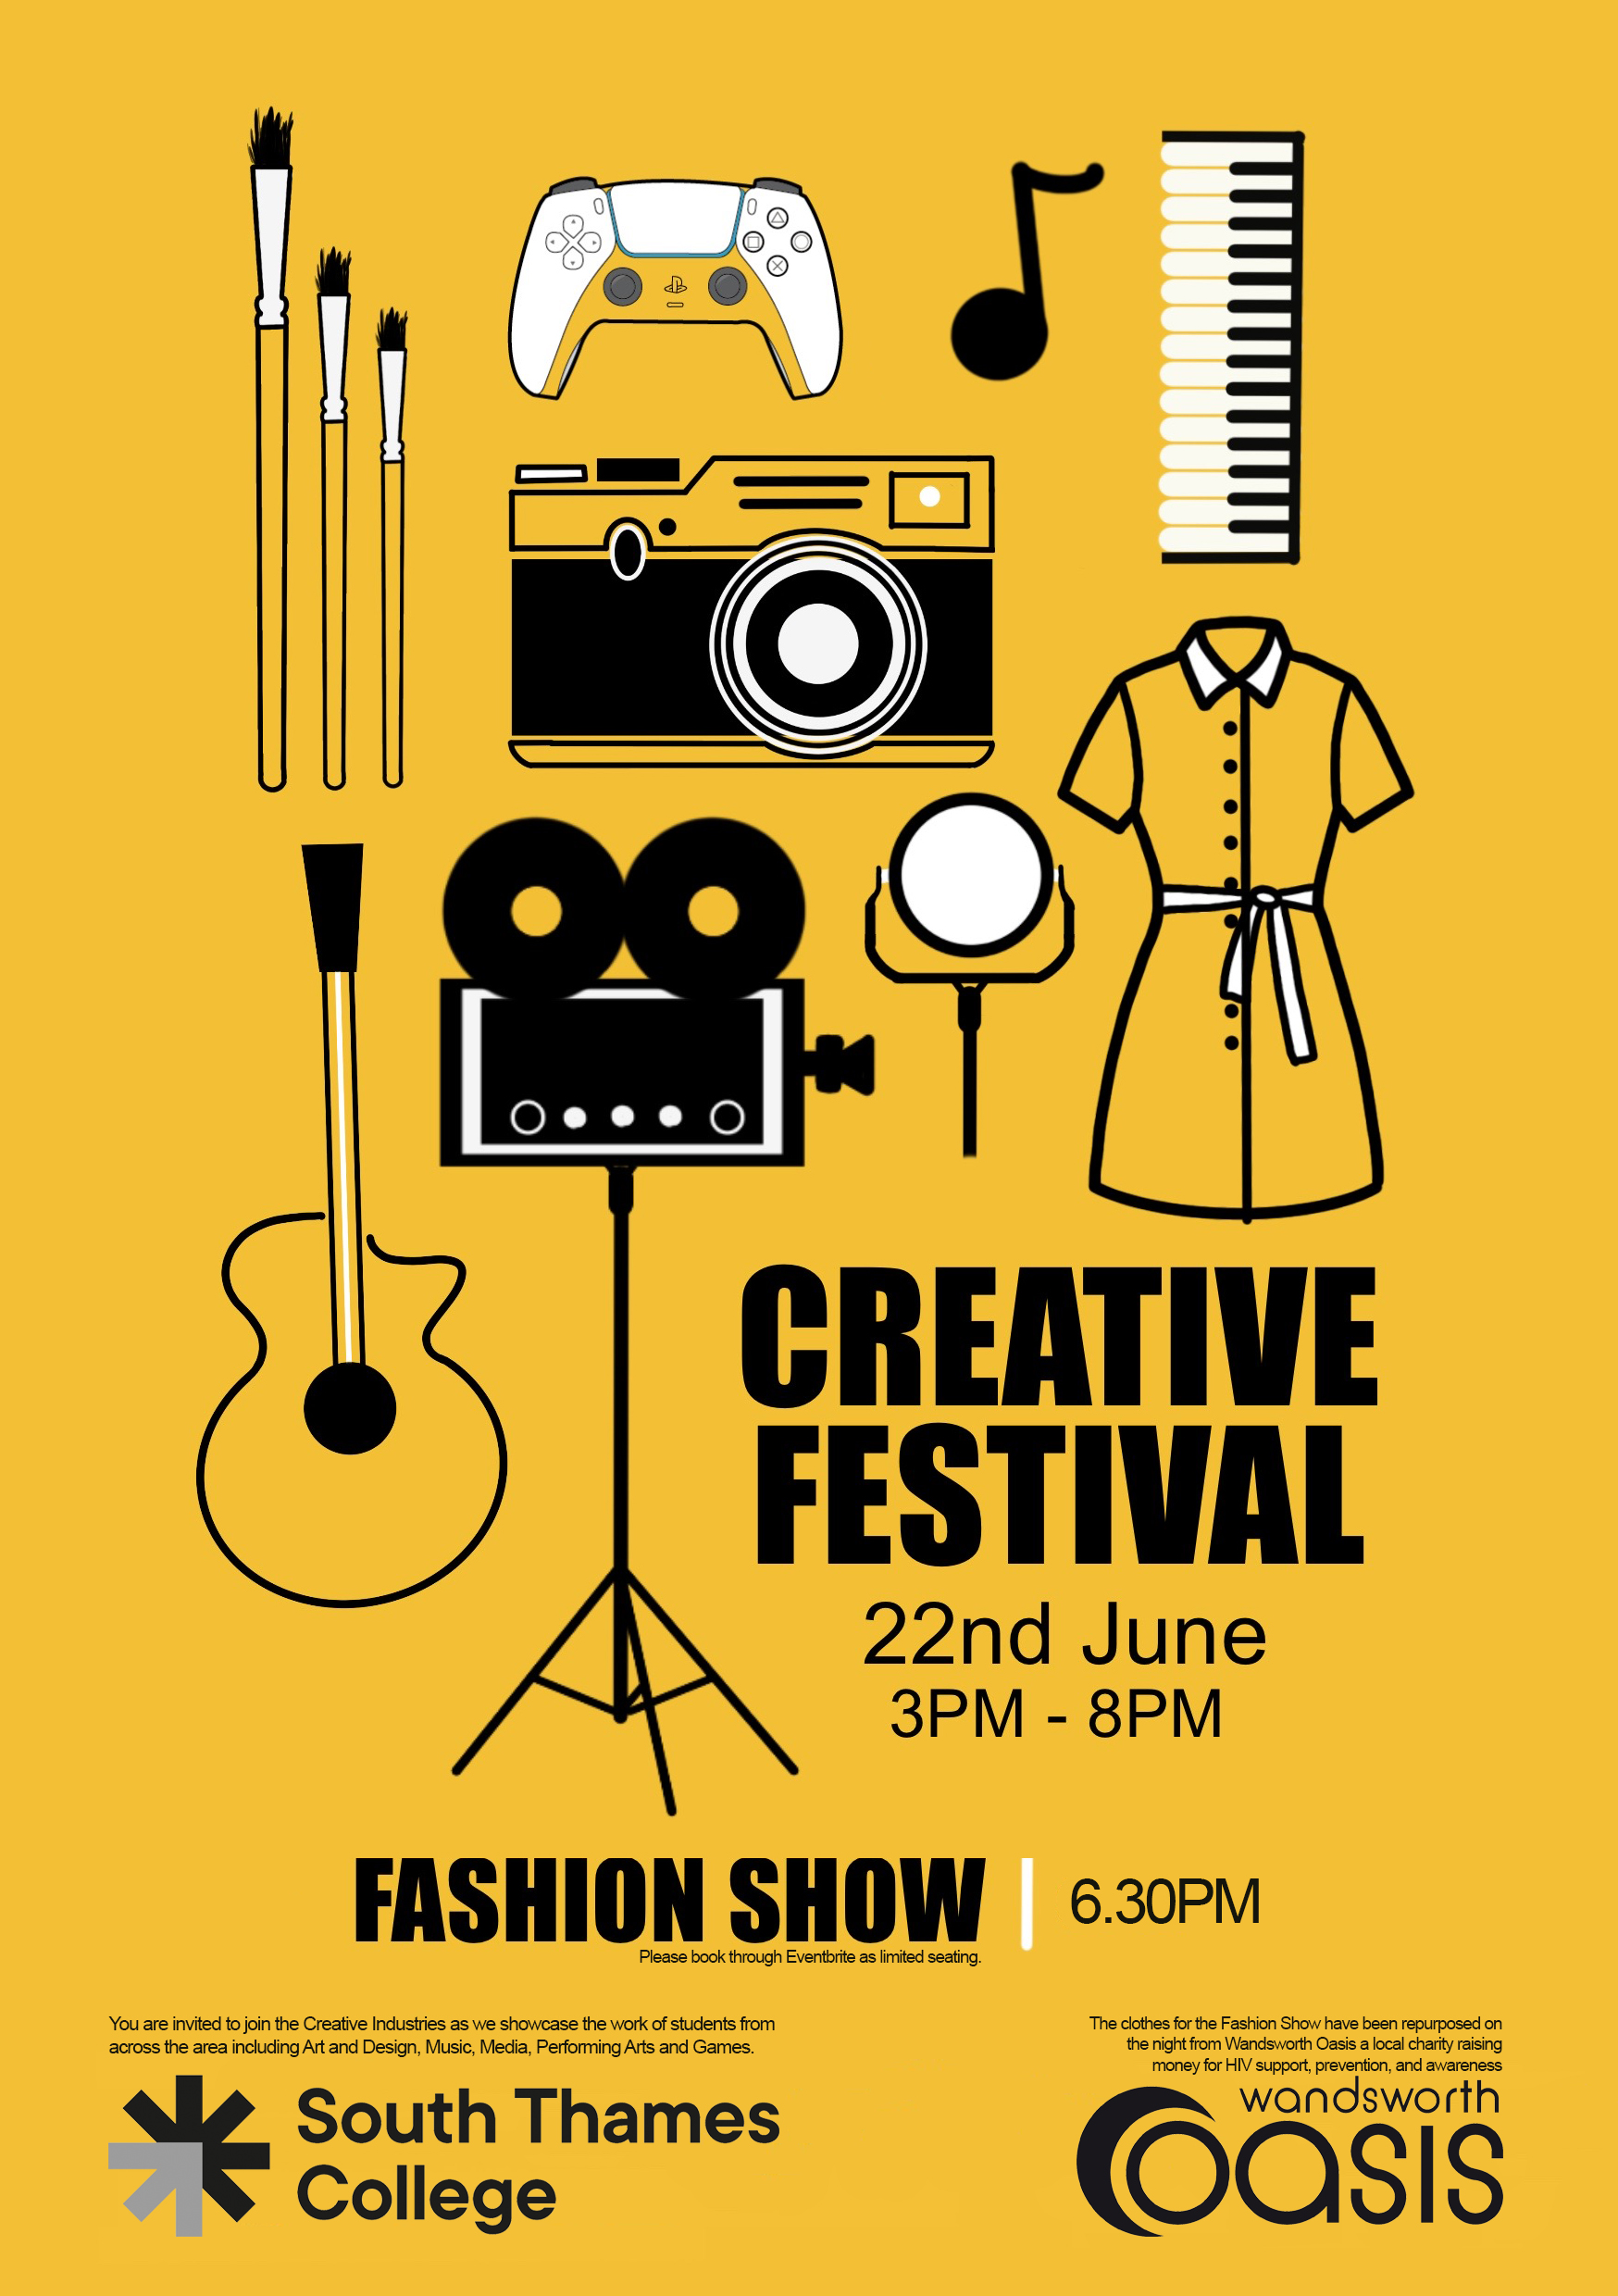 poster for creative festival, 22nd june